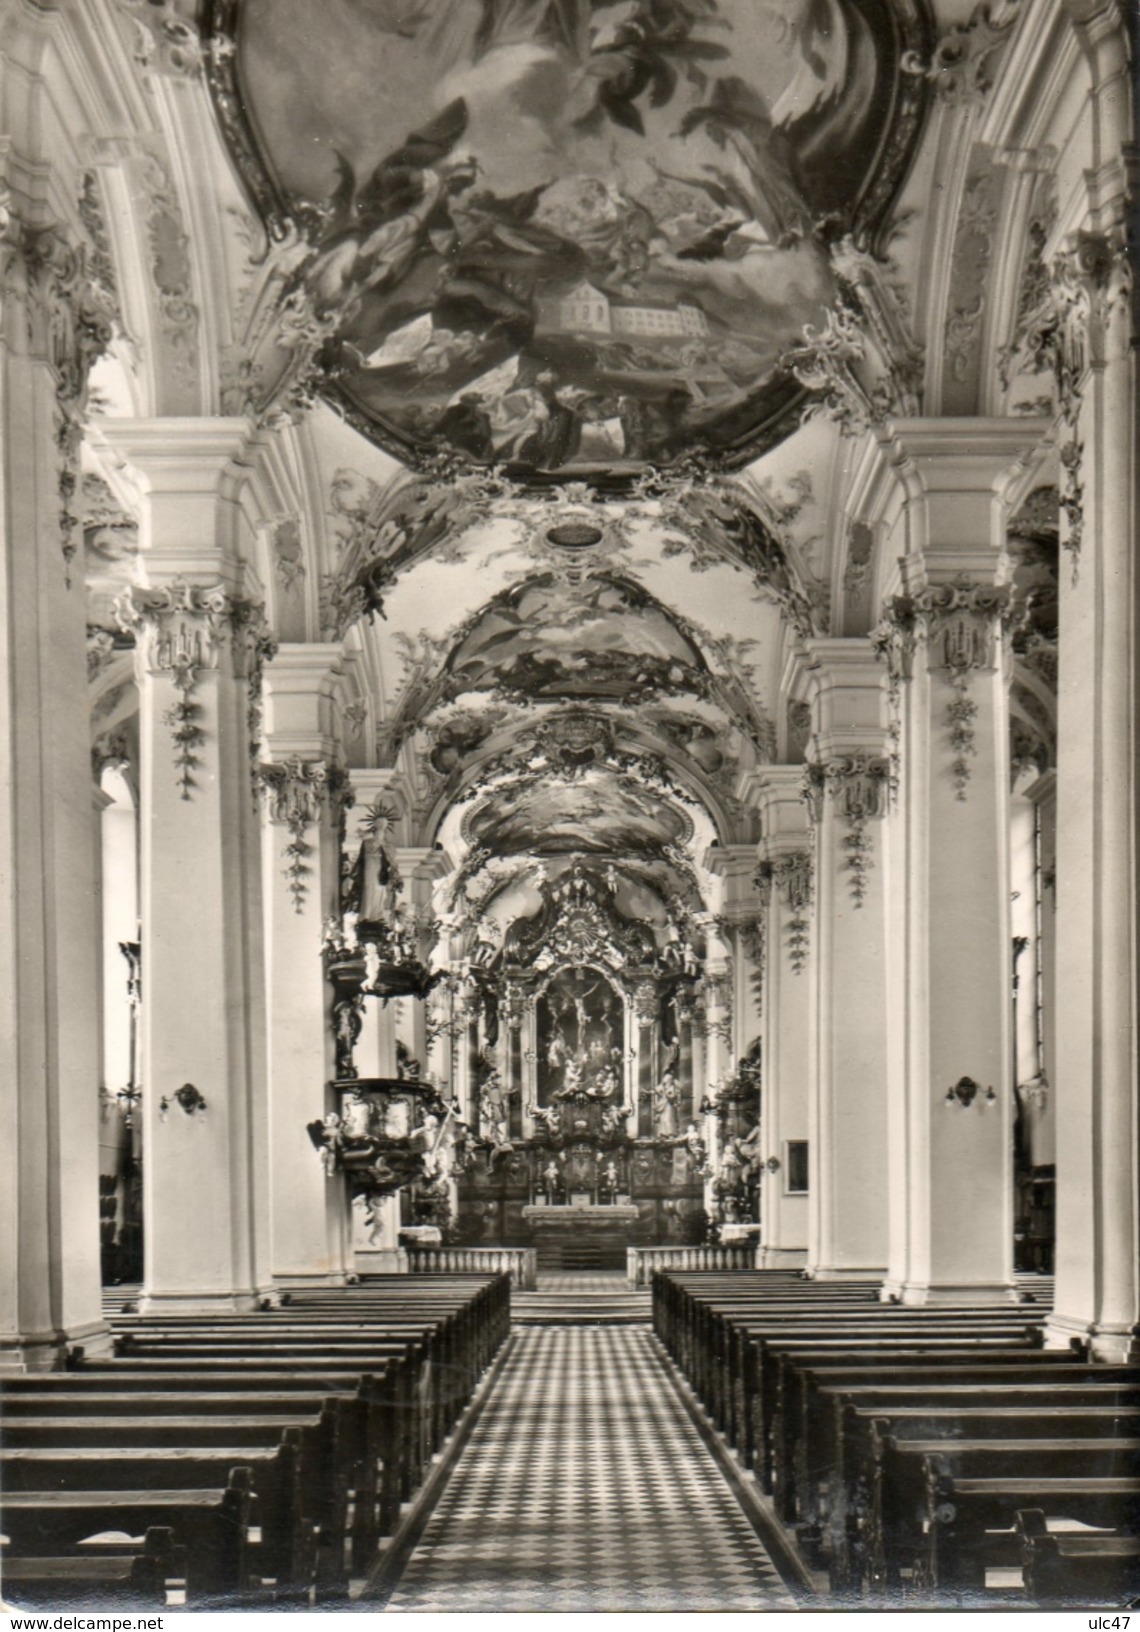 - ISNY Im Aligäu - Ehem. Benediktinerklosterkirche St. Georg - Scan Verso - - Isny